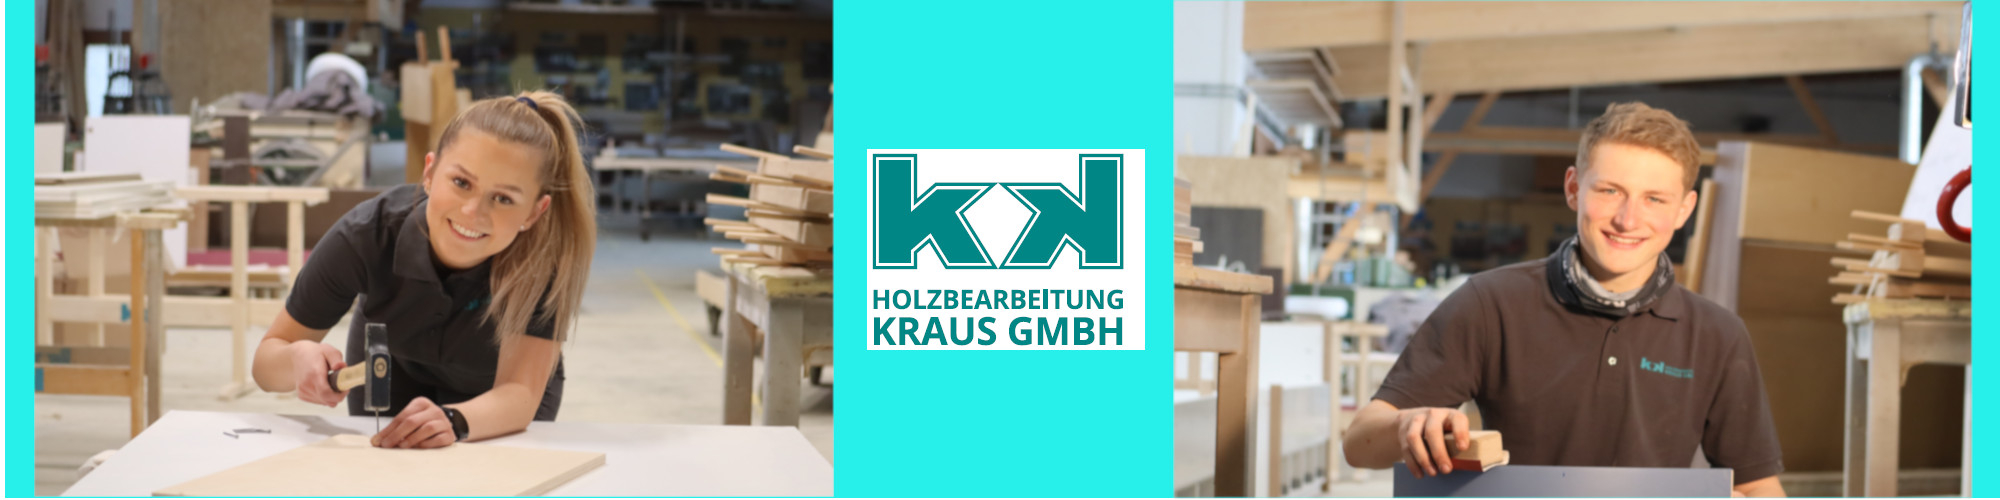 Holzbearbeitung Kraus GmbH